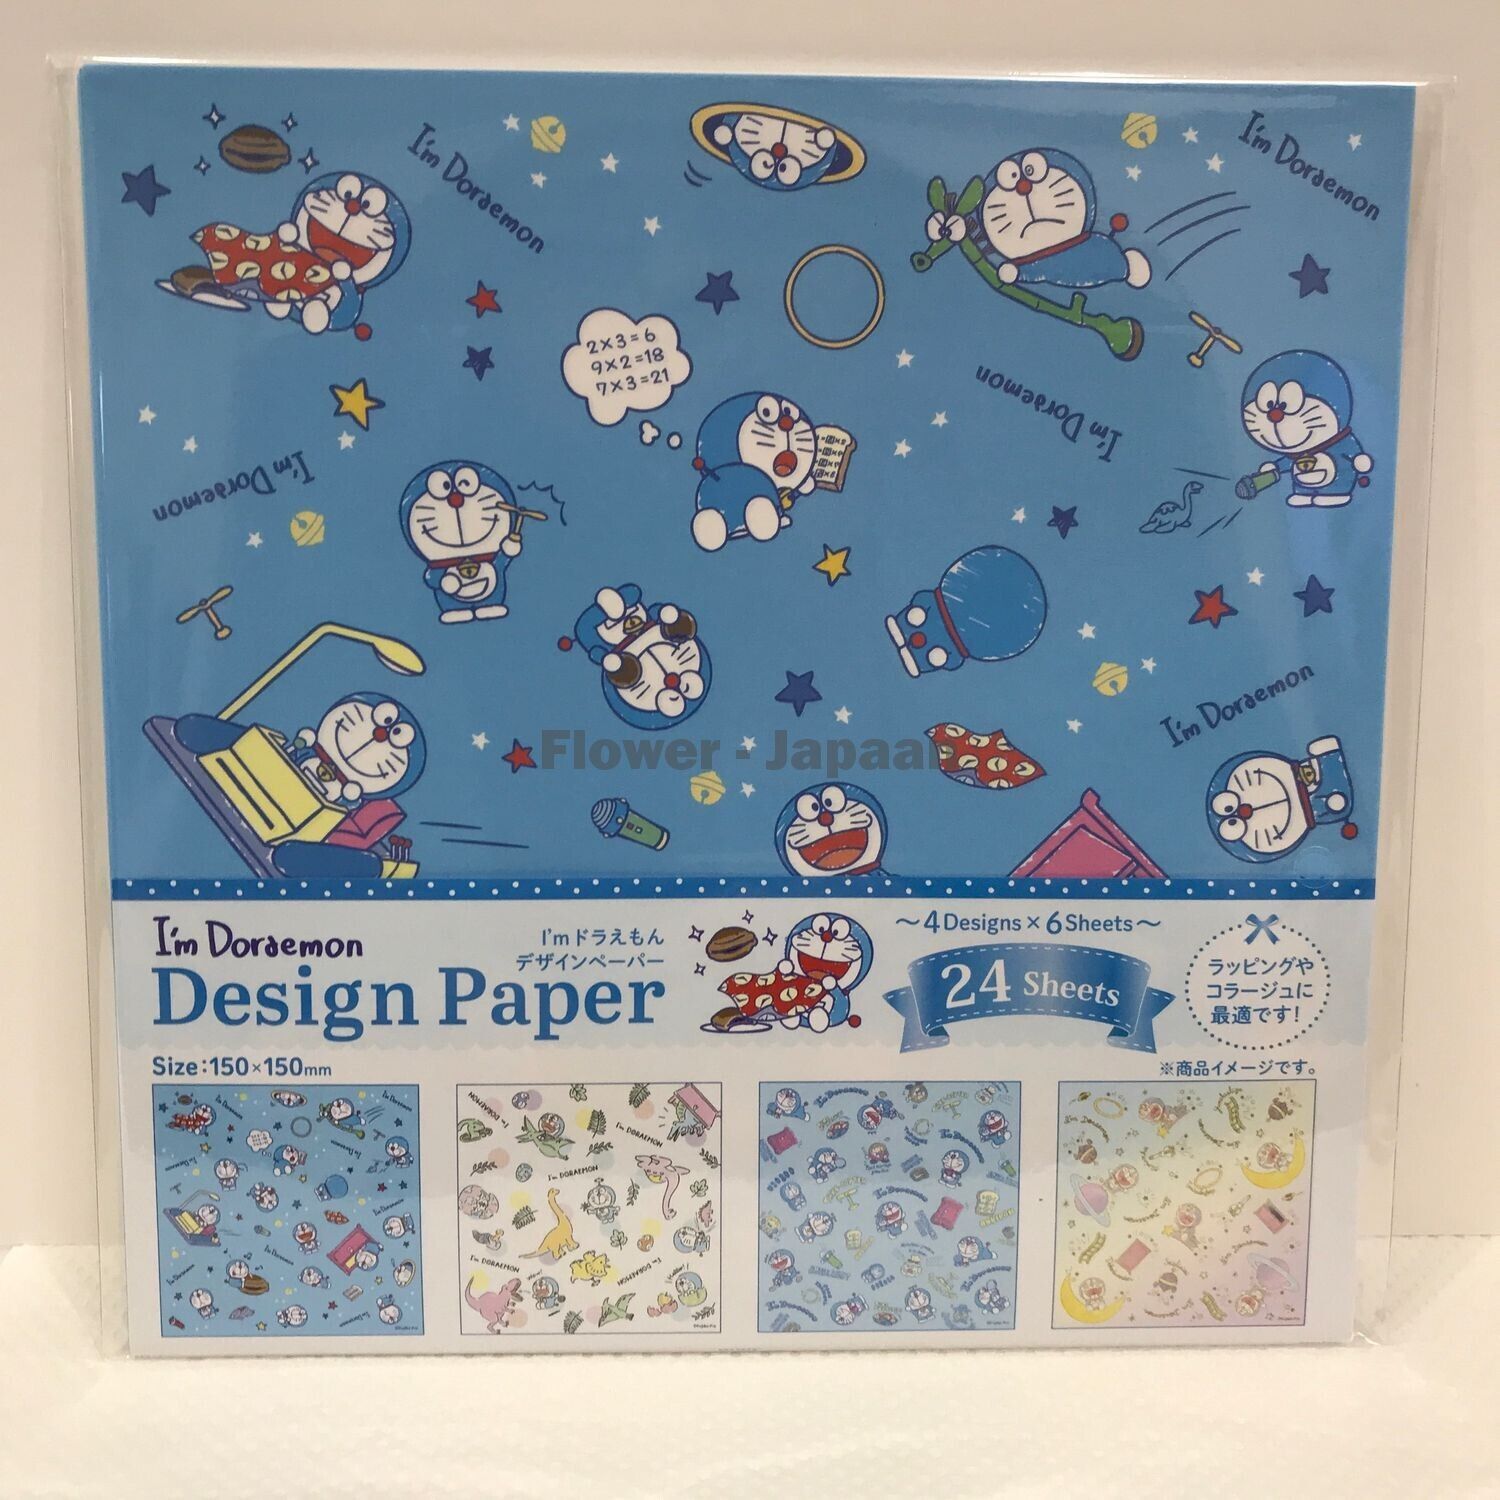 Sanrio Doraemon Design Paper 4 Designs x 6 Sheets 24 Sheets Anime Origami